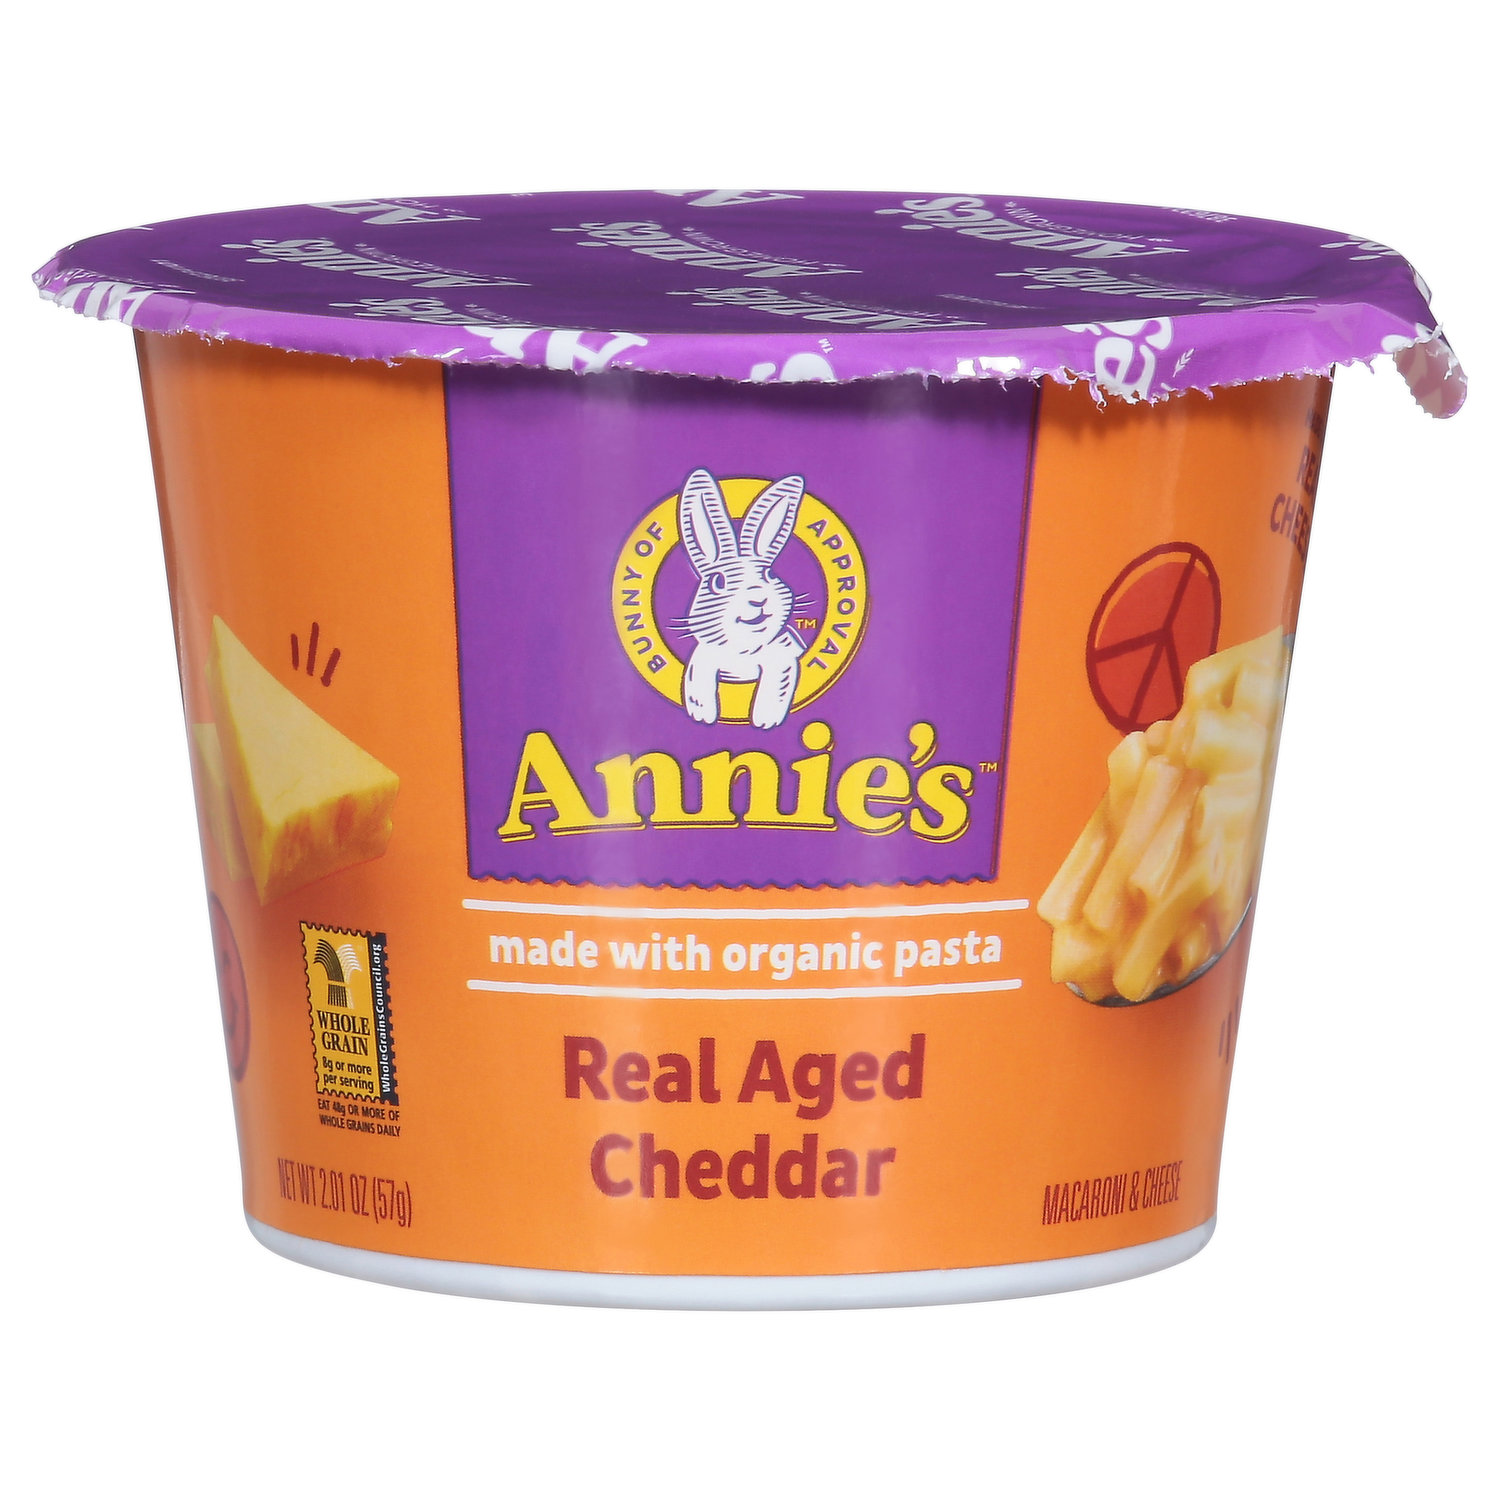 ANNIE'S Shells & White Cheddar Sauce, 12 pk./ 6 oz.- SHIPS FREE